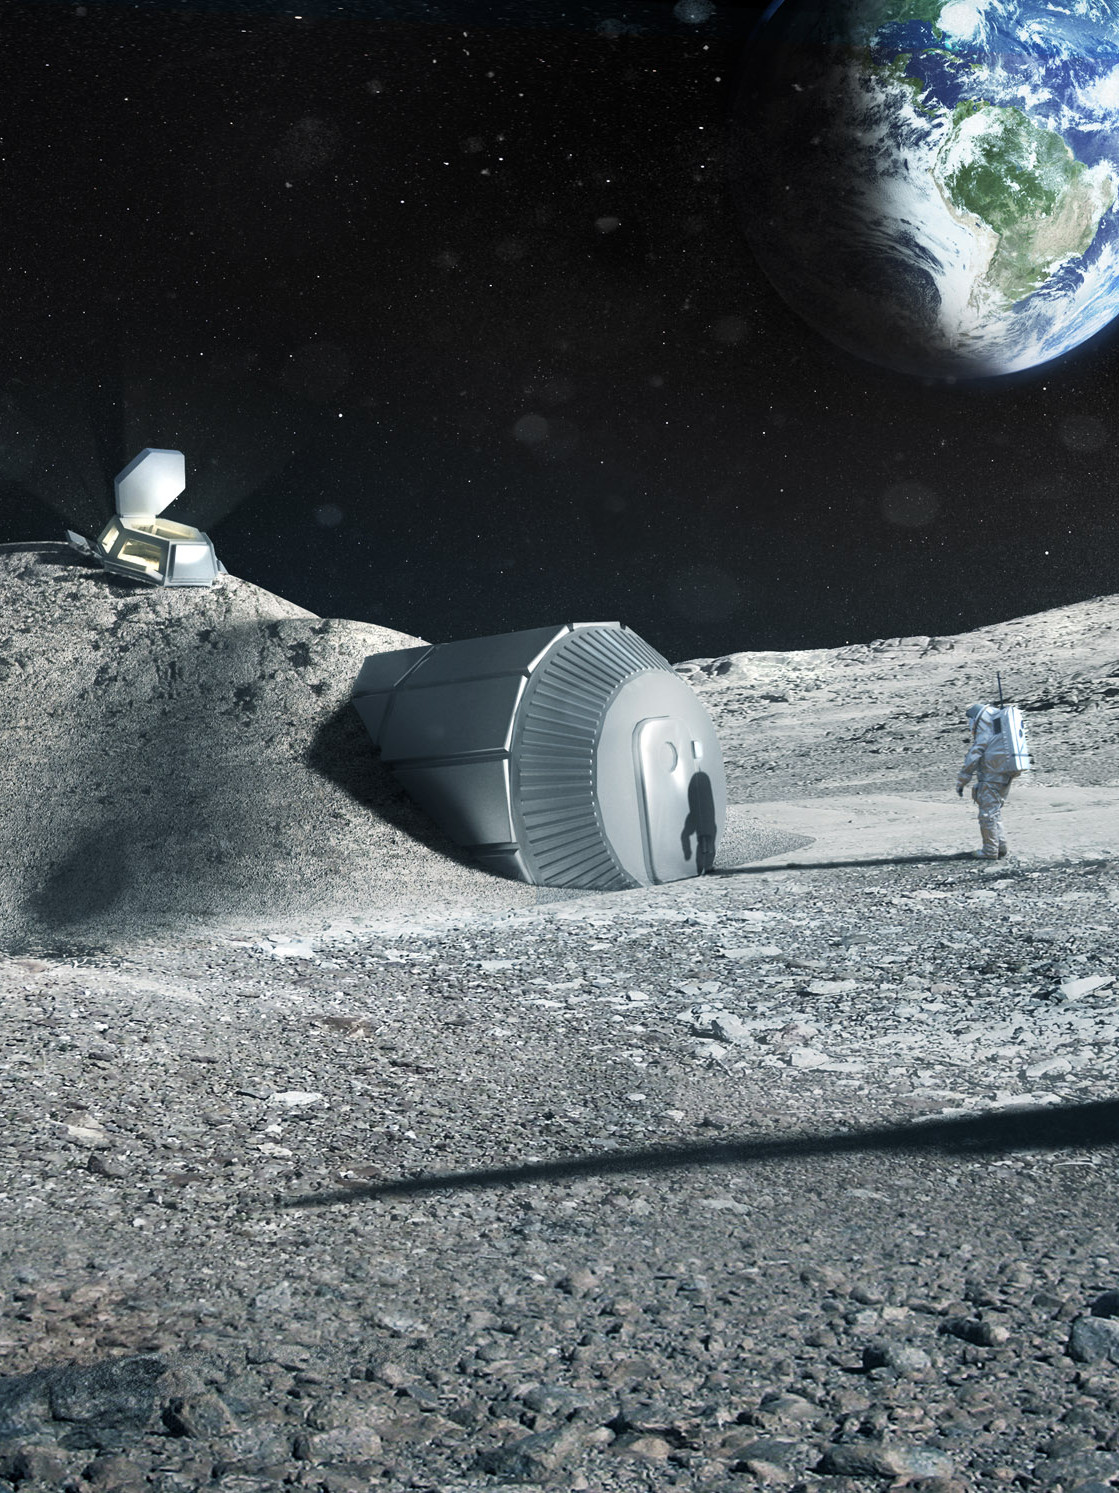 Lunar Habitat on The Moon